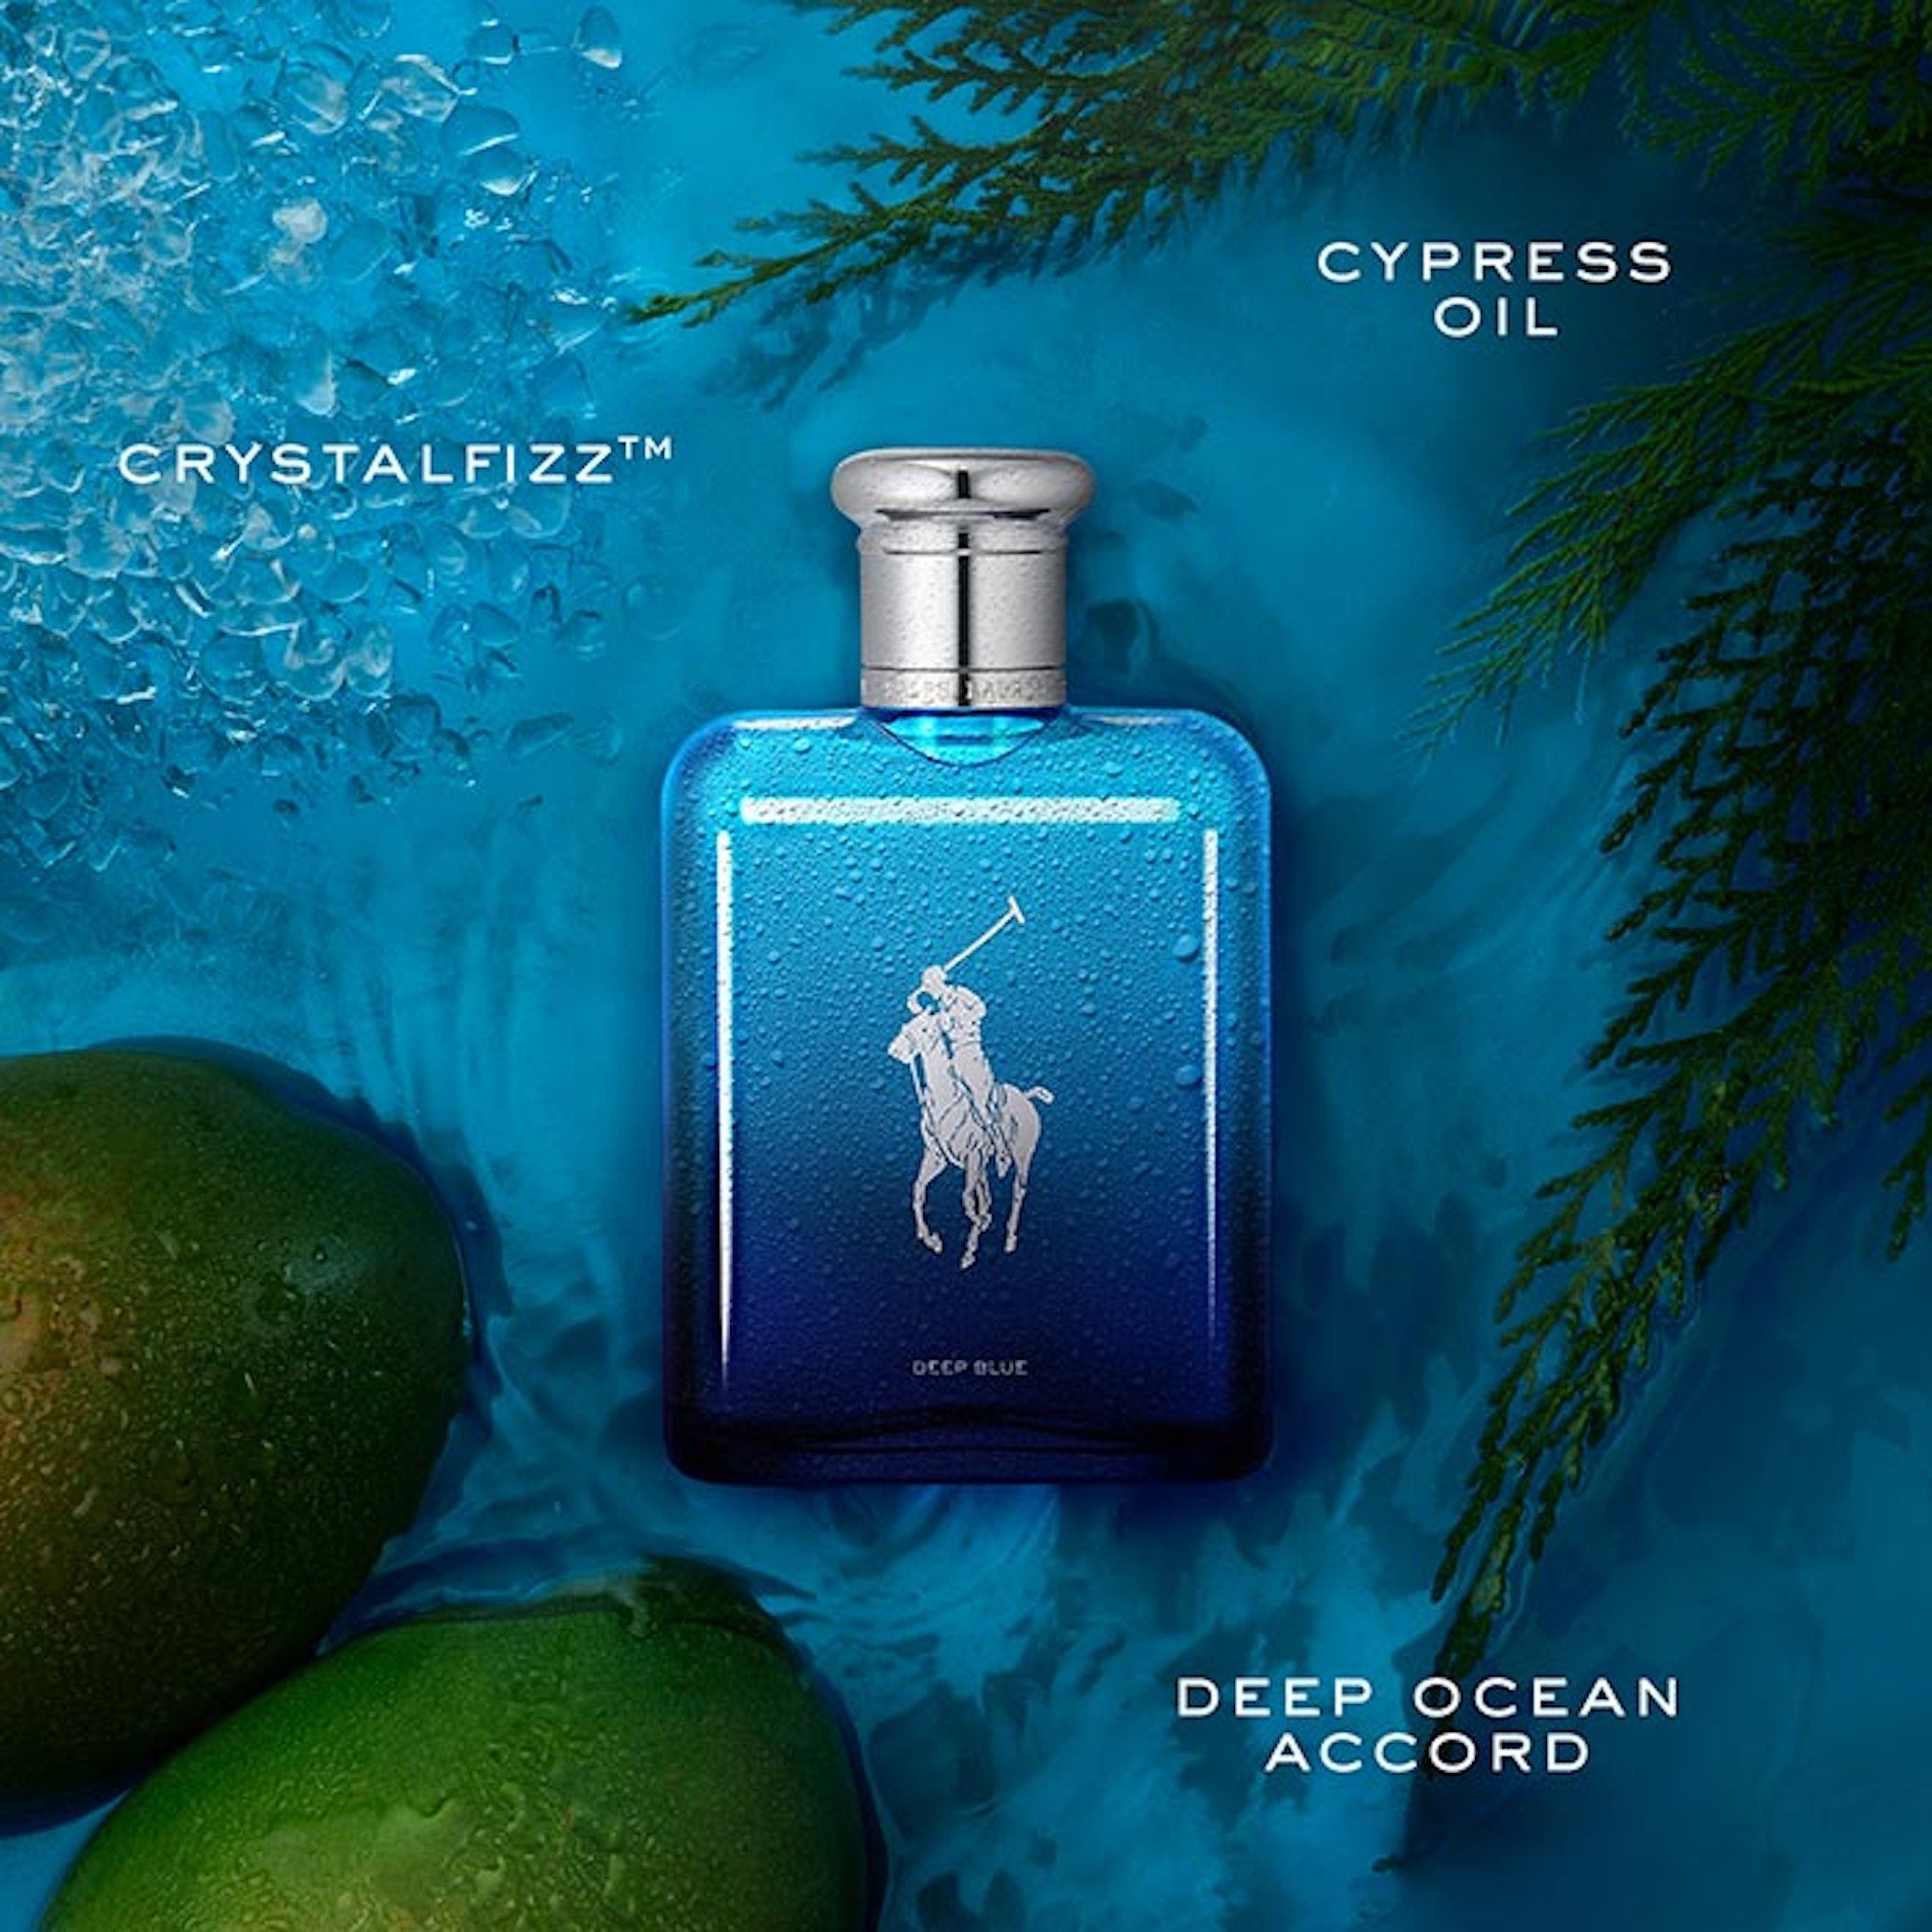 Ralph Lauren Polo Deep Blue For Men Parfum | My Perfume Shop Australia